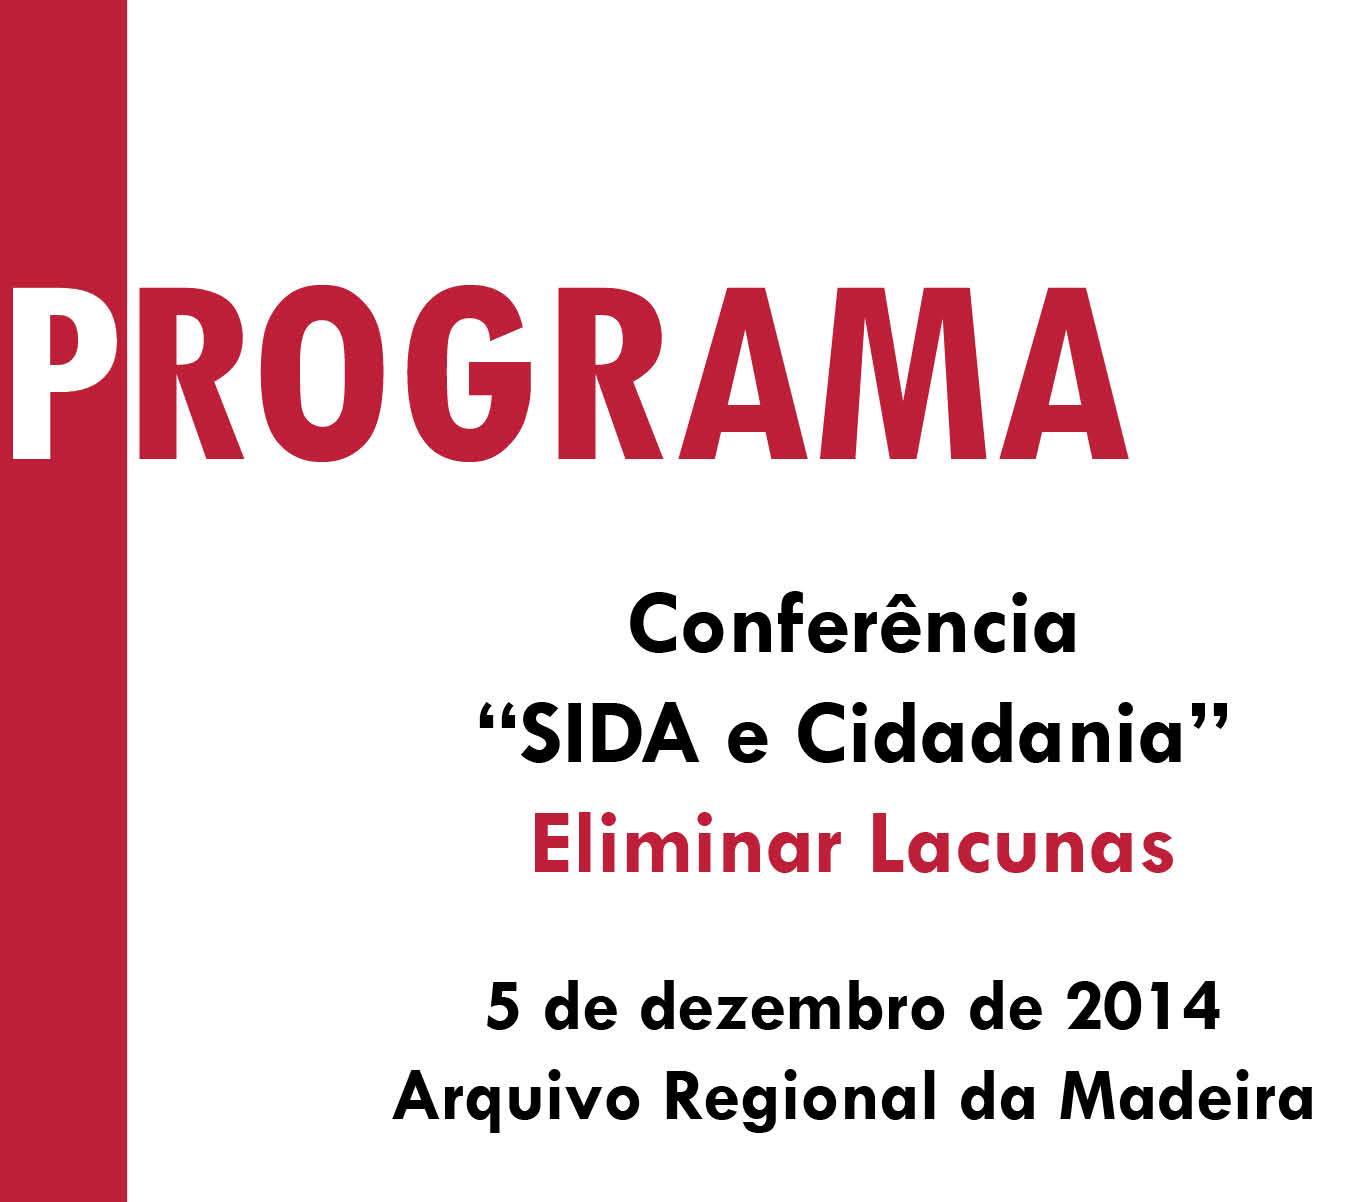 Conferência “SIDA e Cidadania - Eliminar Lacunas”